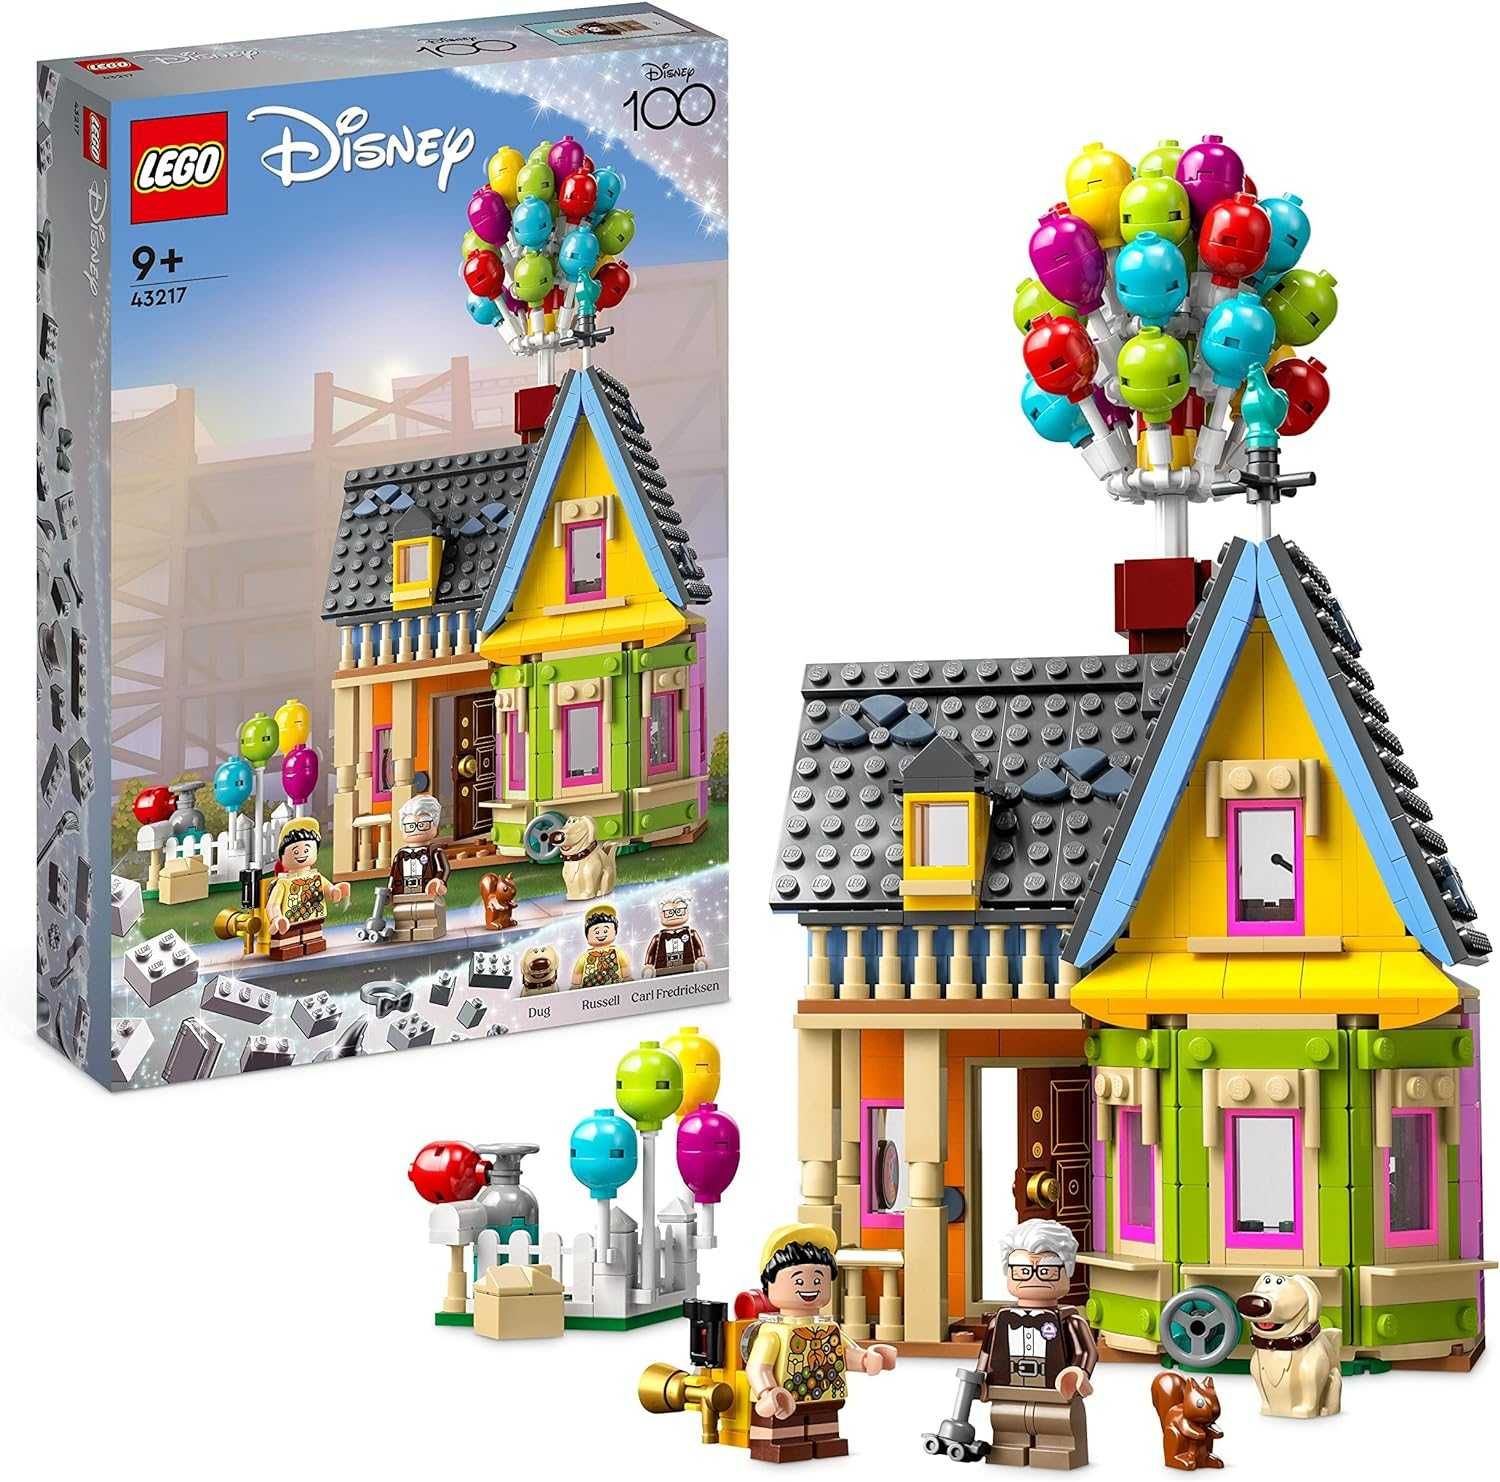 LEGO 43217 Disney i Pixar Dom z bajki „Odlot”